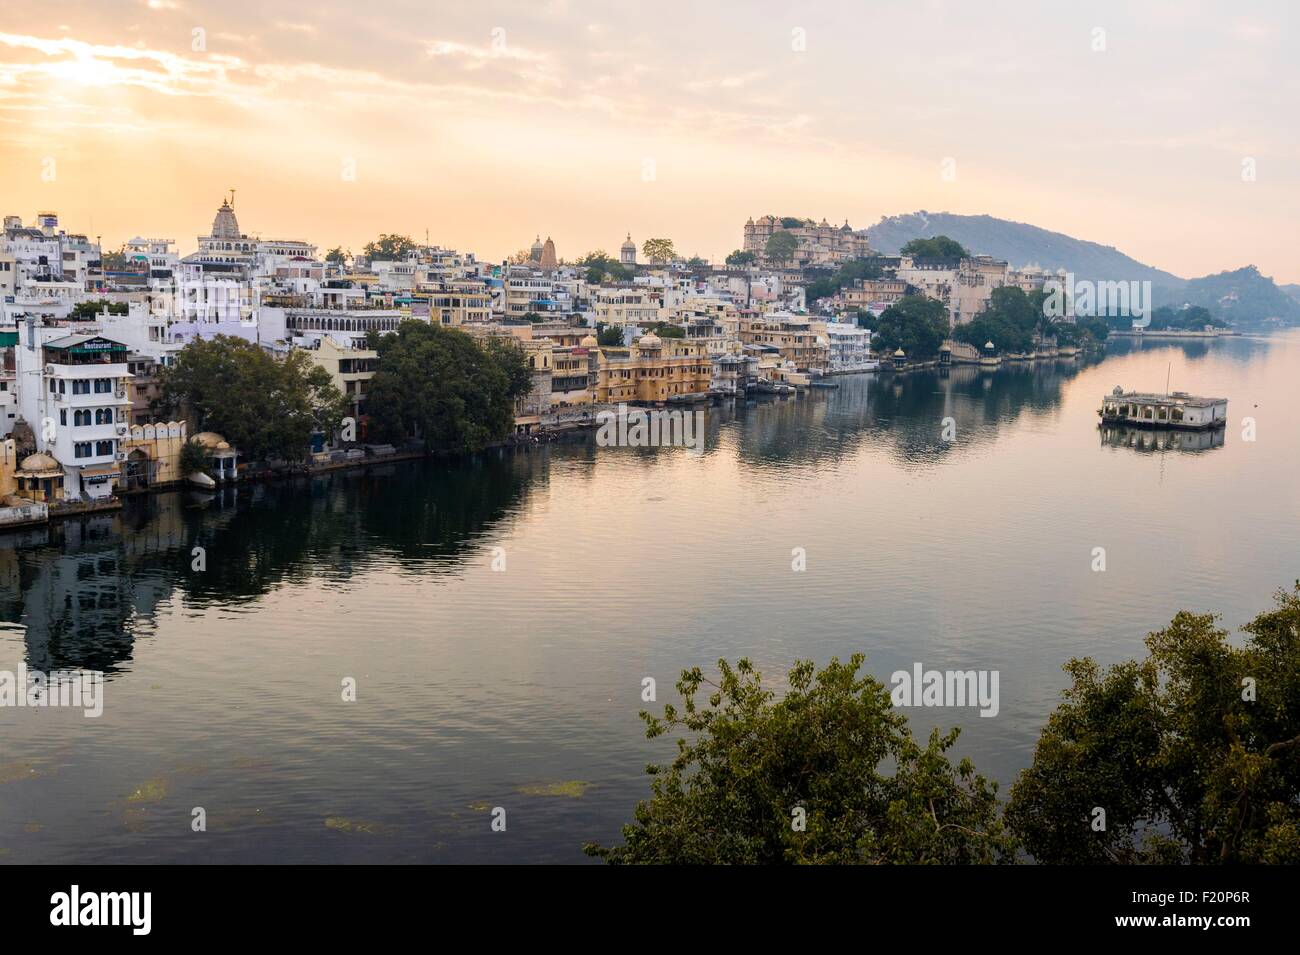 Indien, Rajasthan state, Udaipur, das Stadtschloss, Pichola-See Stockfoto